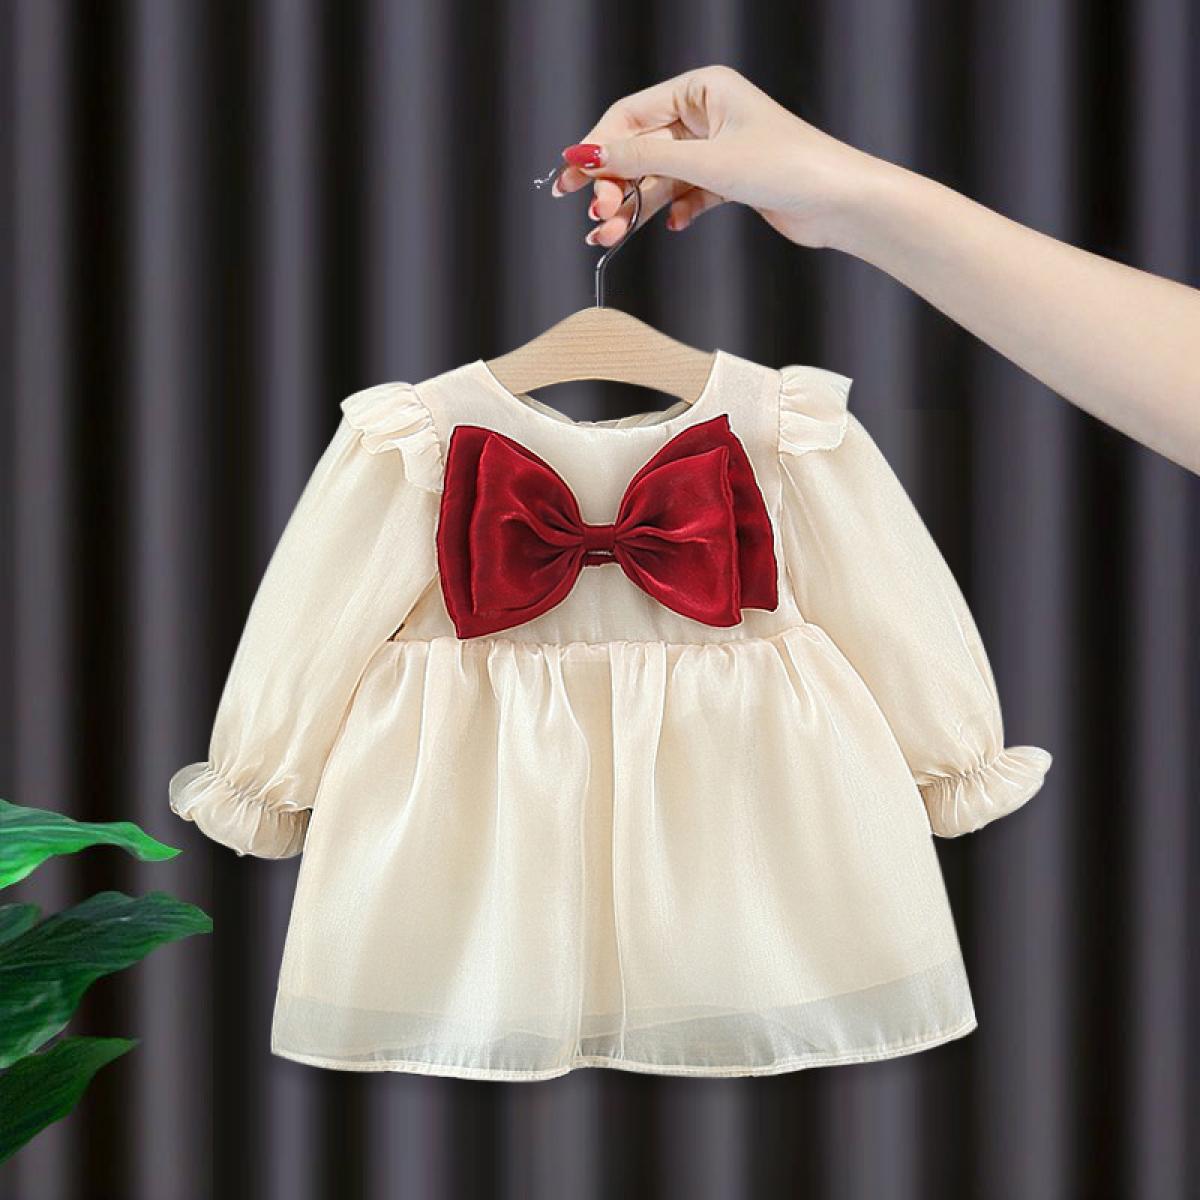 ❣️𝑯𝒆𝒓𝒂 𝑨𝒏𝒔𝒂𝒓𝒊❣️ | Baby girl frock design, Baby girl dress design,  Kids dress collection